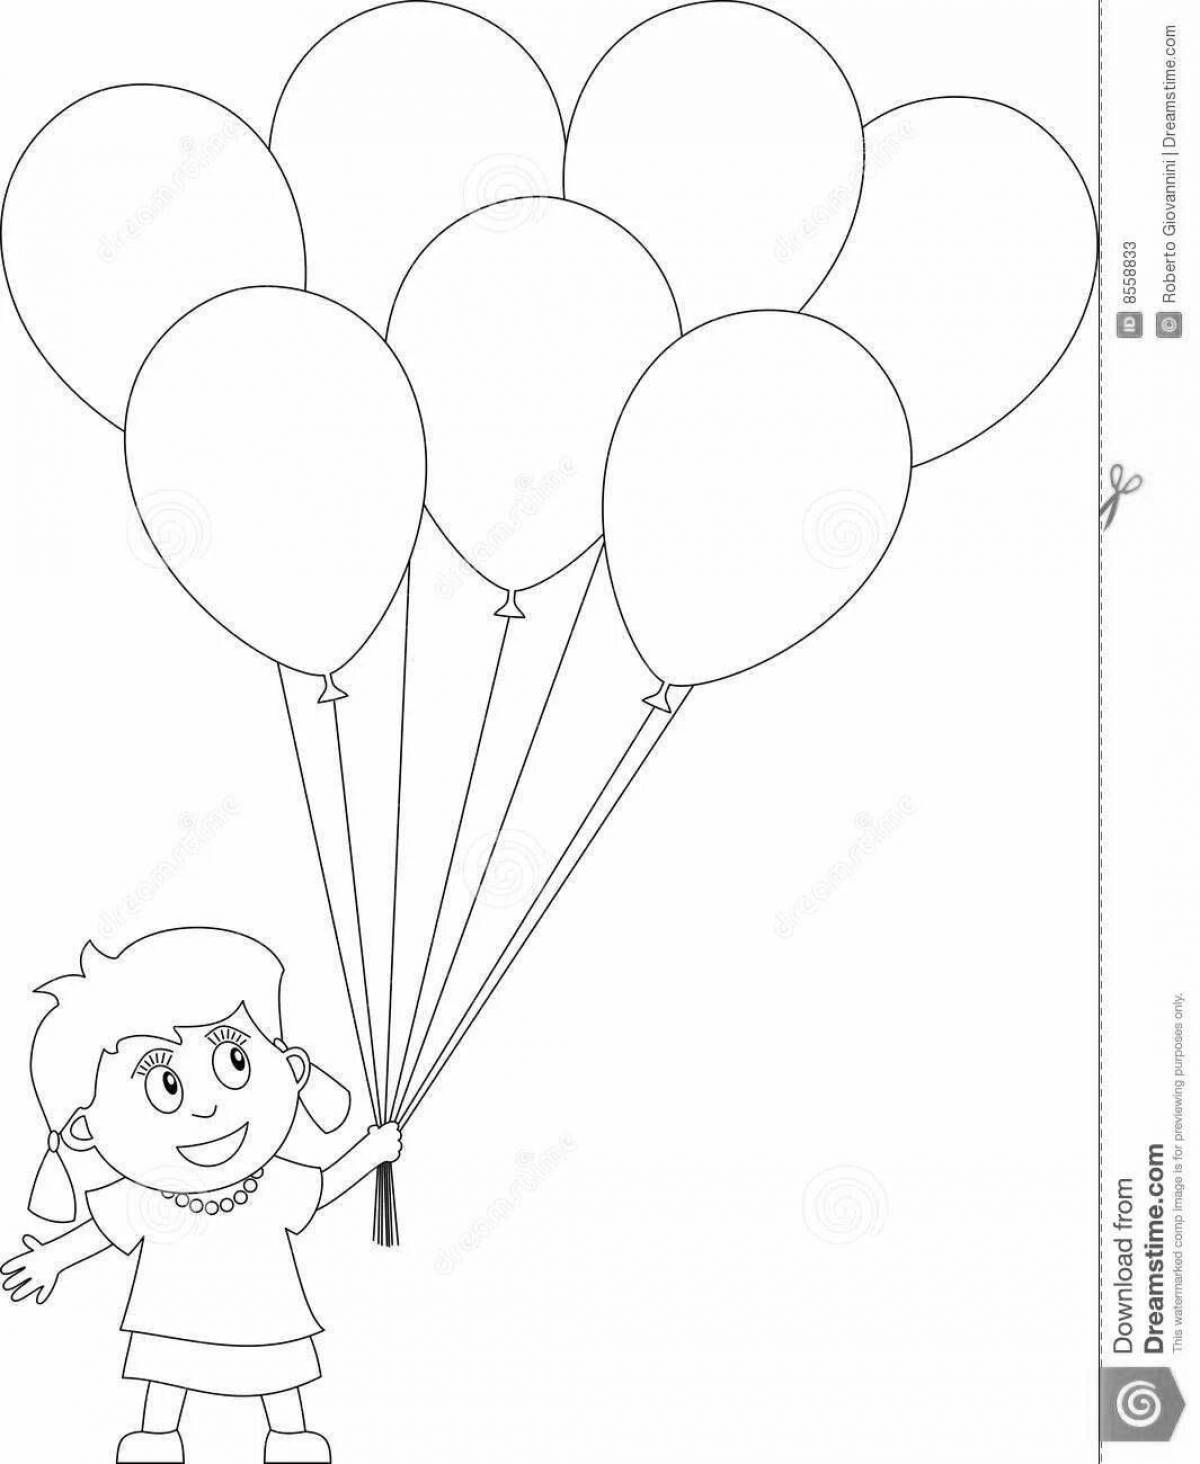 Coloring book magic bunch of balloons